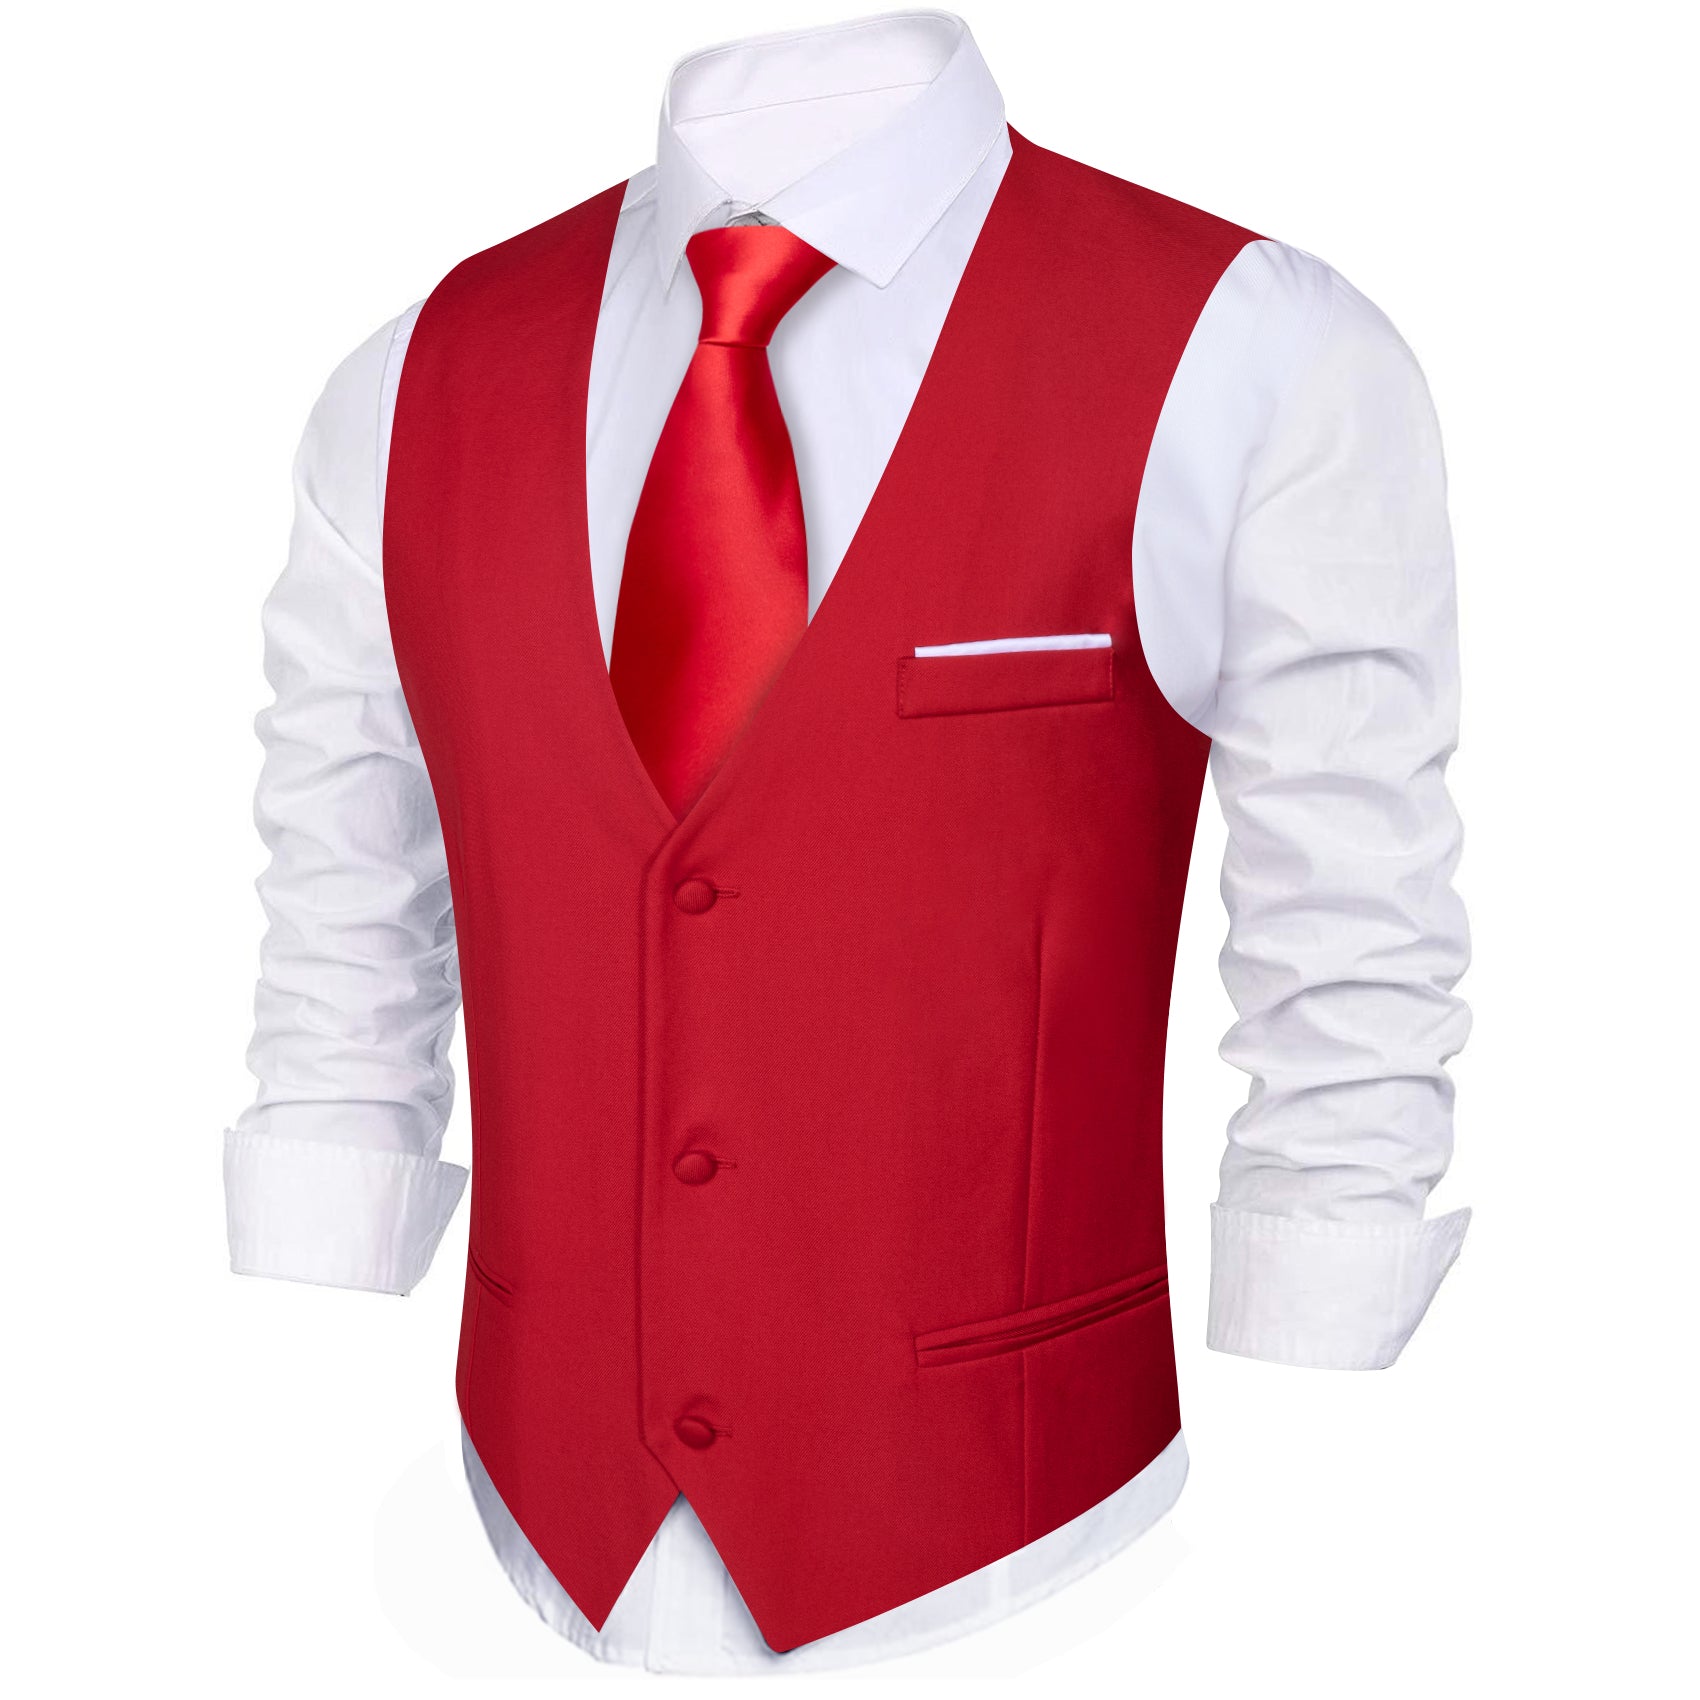 Shining Red Solid V-Neck Waistcoat Vest for Business